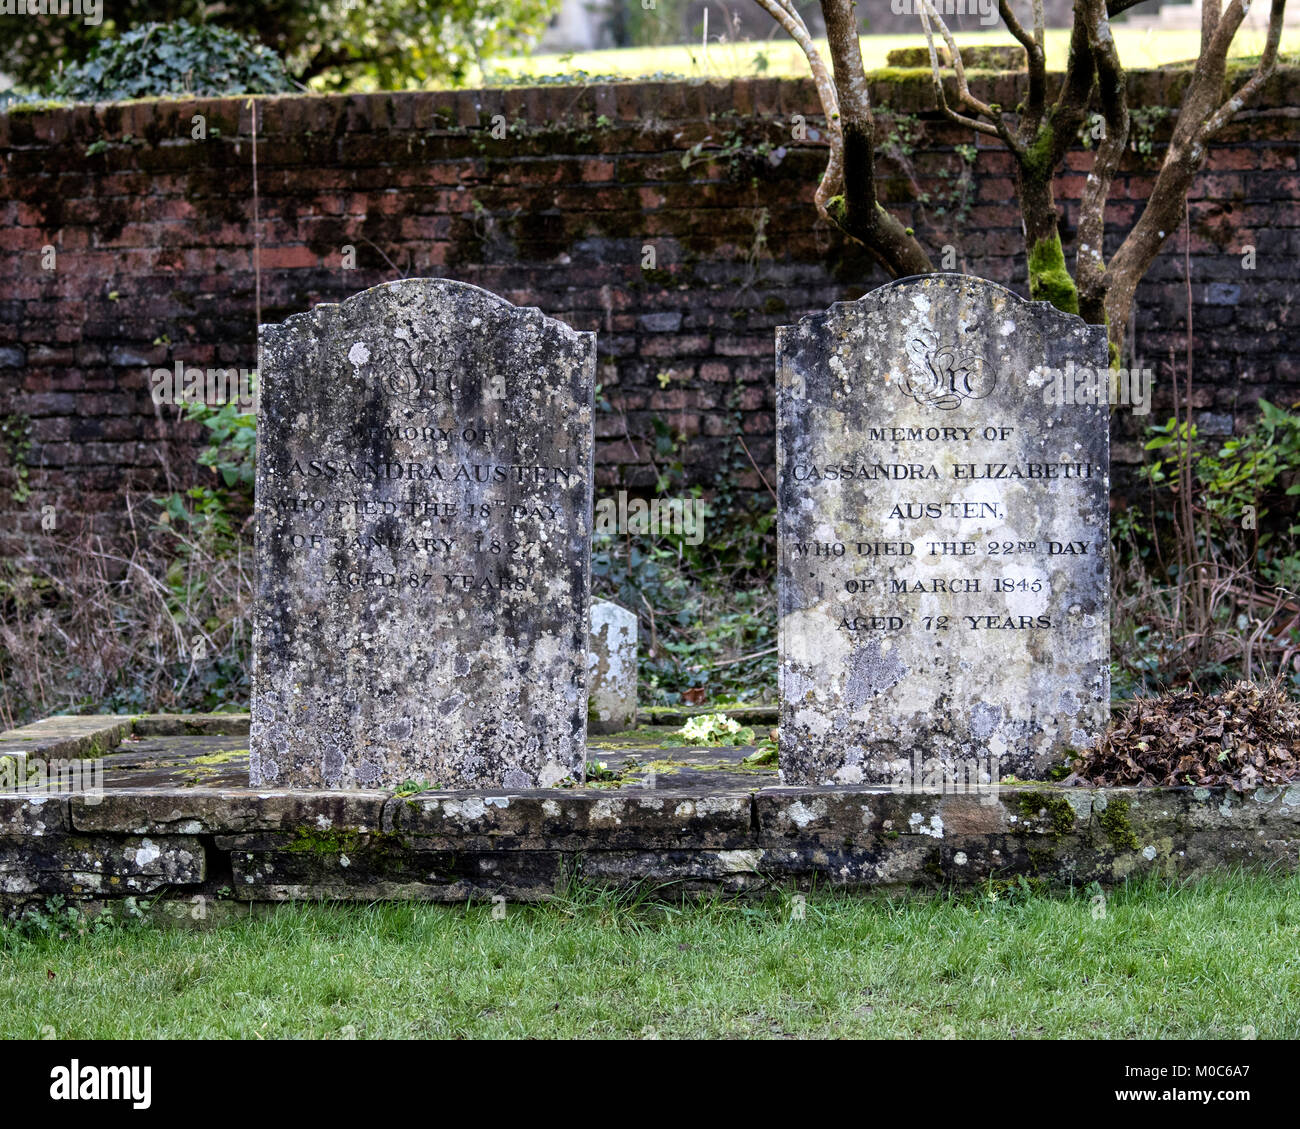 The graves of Cassandra Elizabeth Austen (elder sister of Jane Austen)and  Cassandra Austen (nee Leigh) mother of Jane Austen in Chawton Hampshire Stock Photo